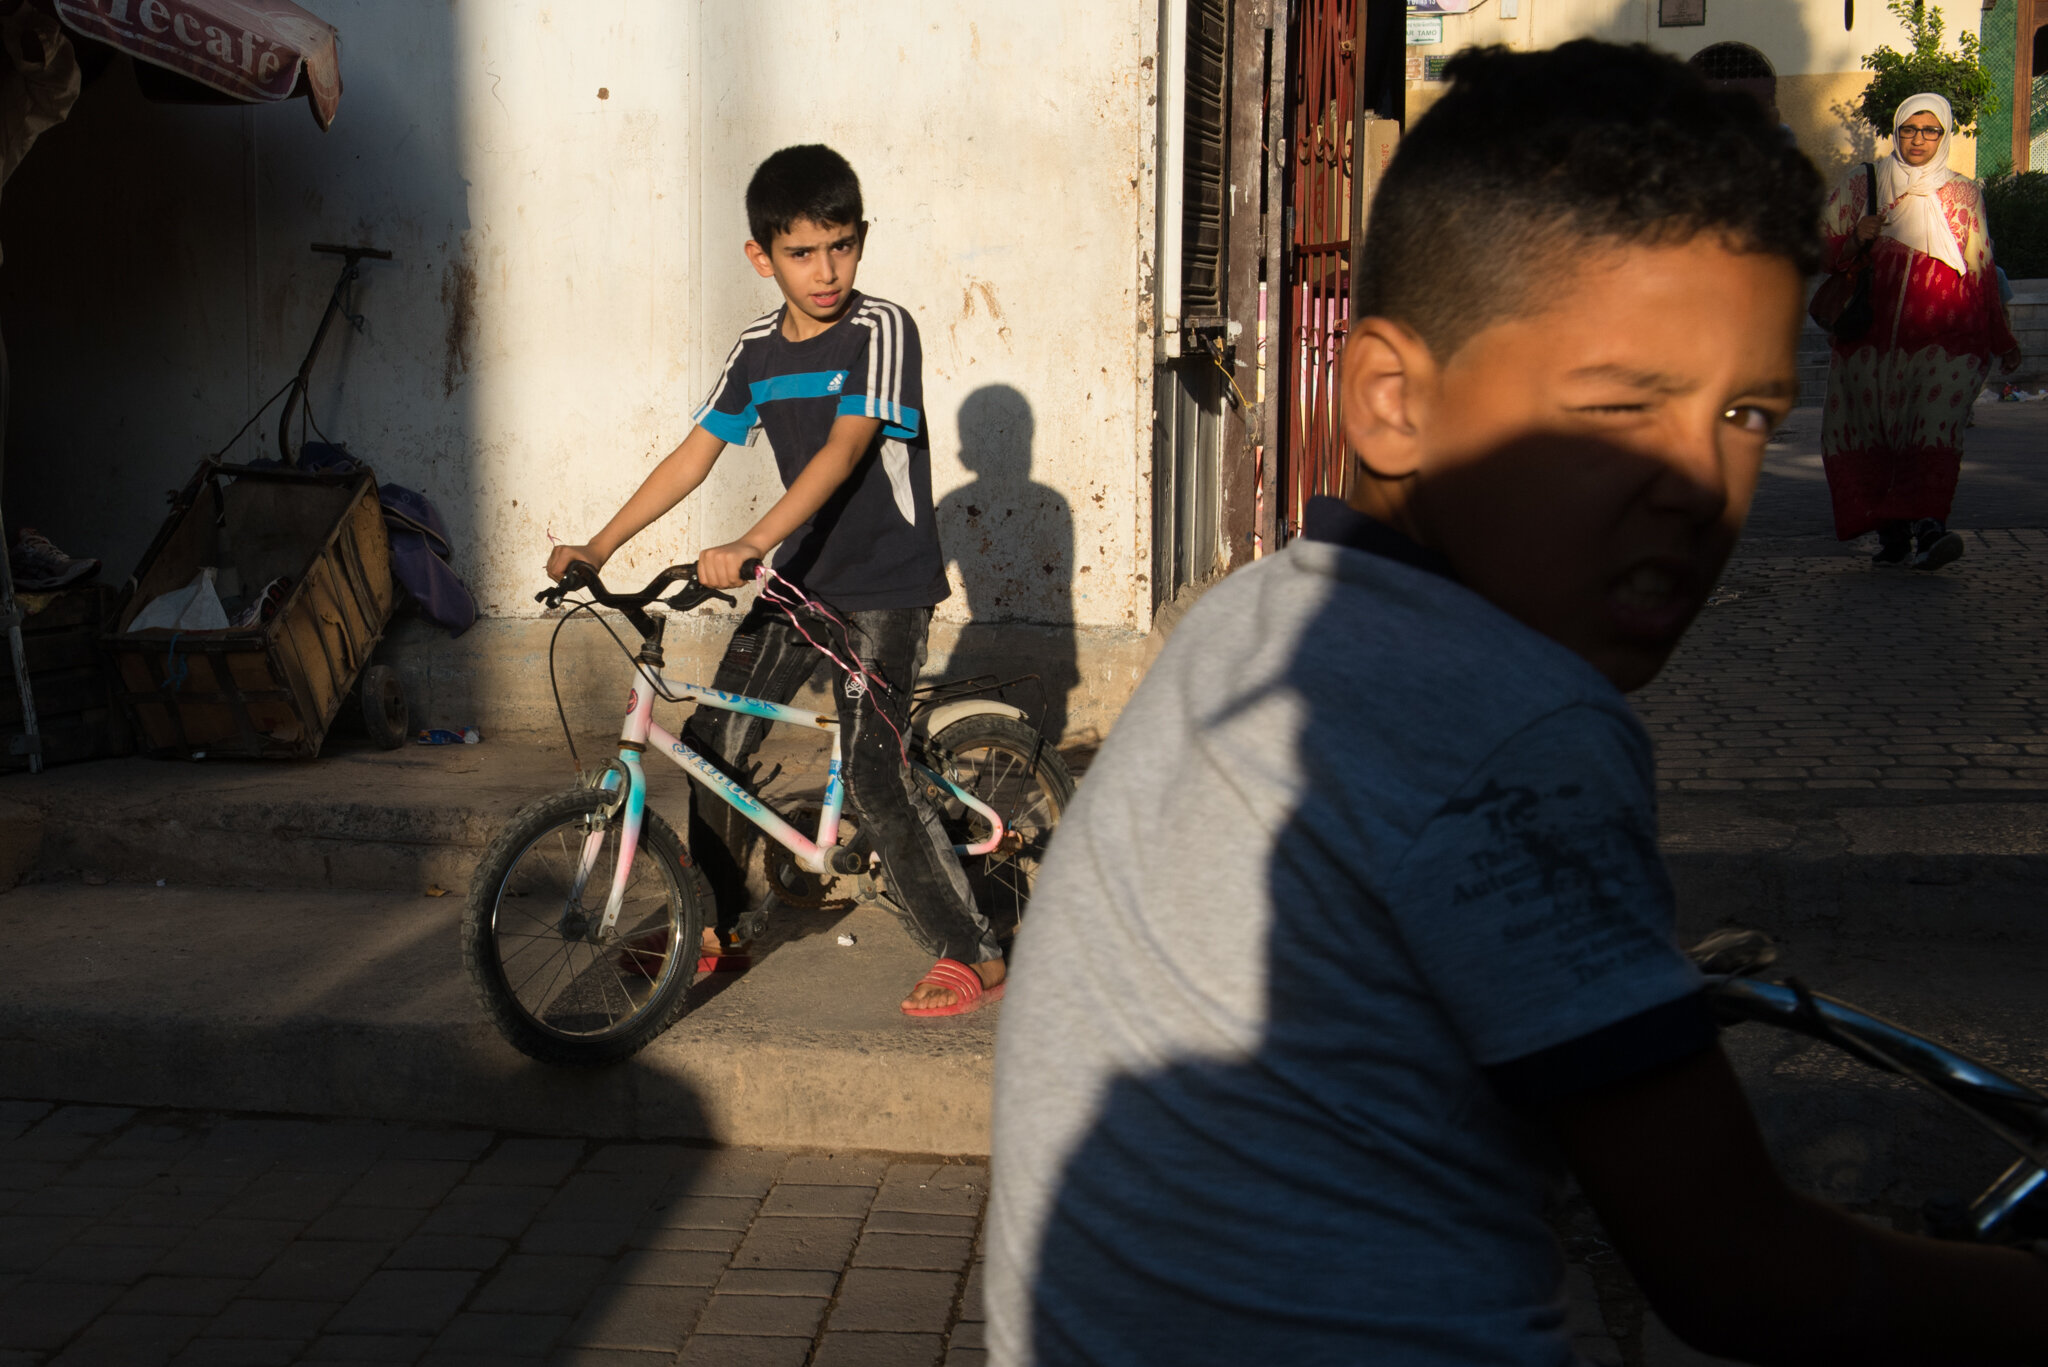    Morocco - Fes     Boys riding bikes.  